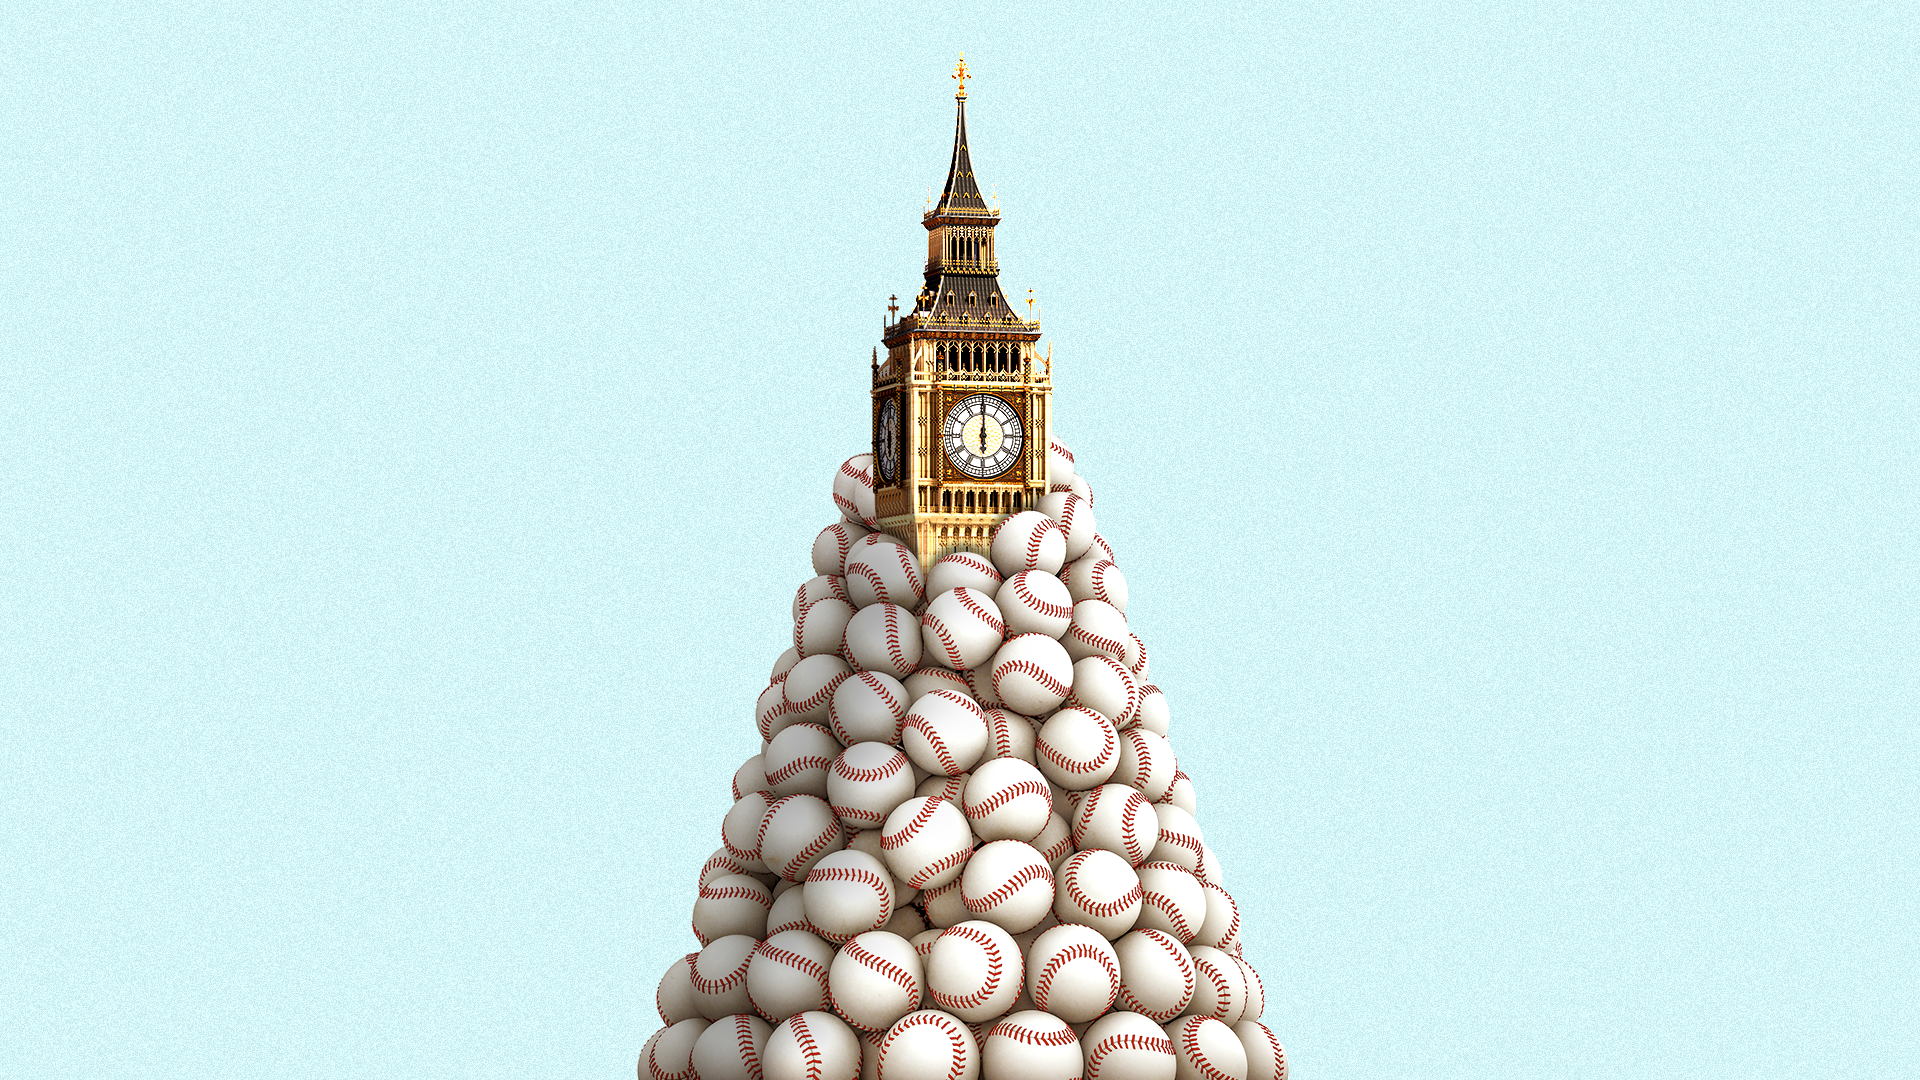 Illustration of Big Ben poking out of a pile of baseballs